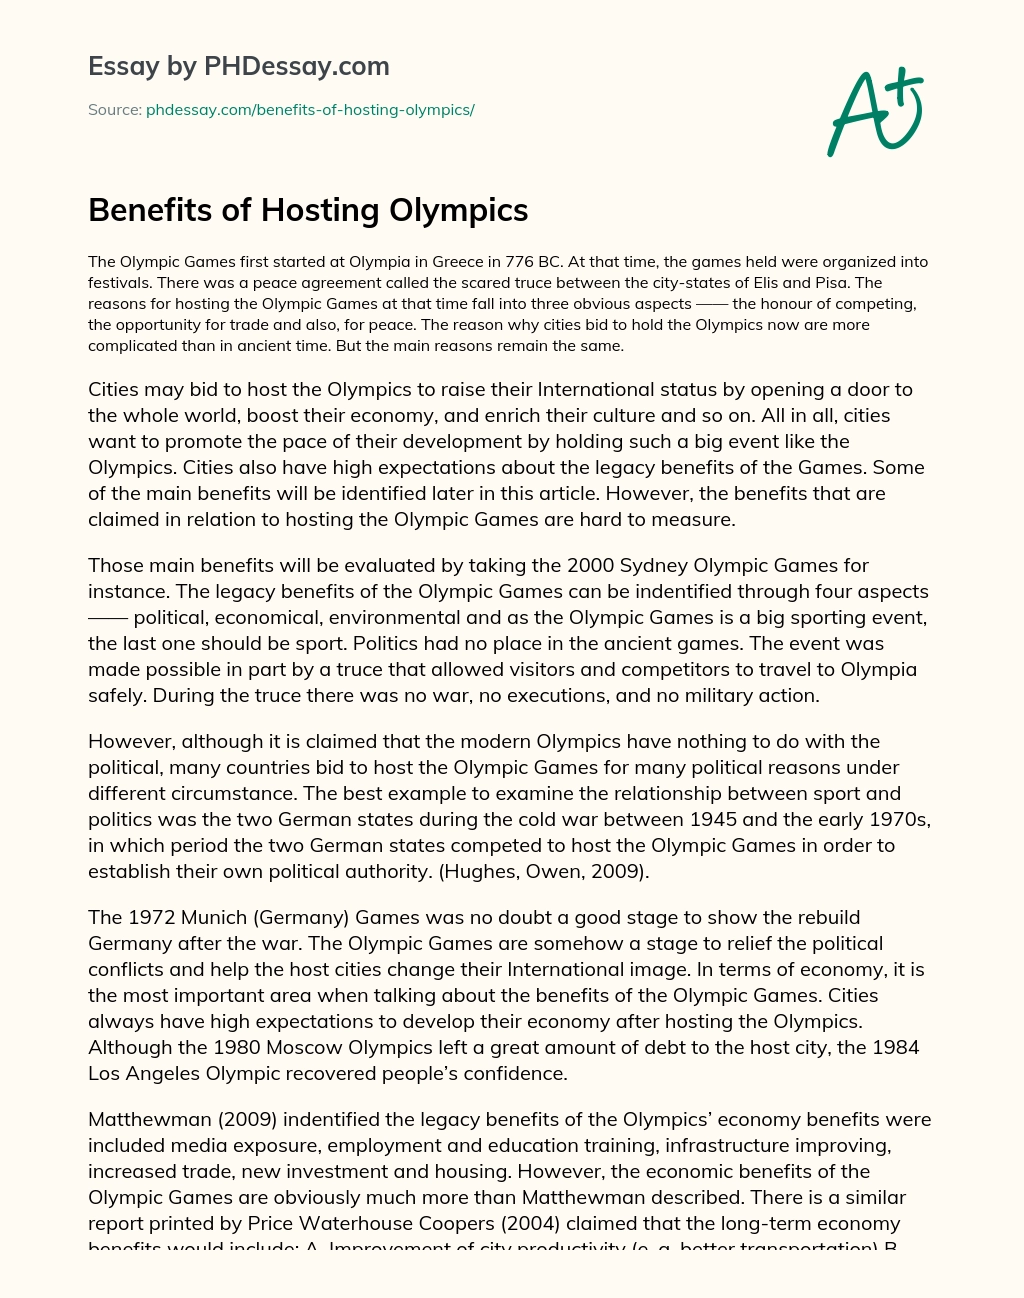 Benefits of Hosting Olympics essay